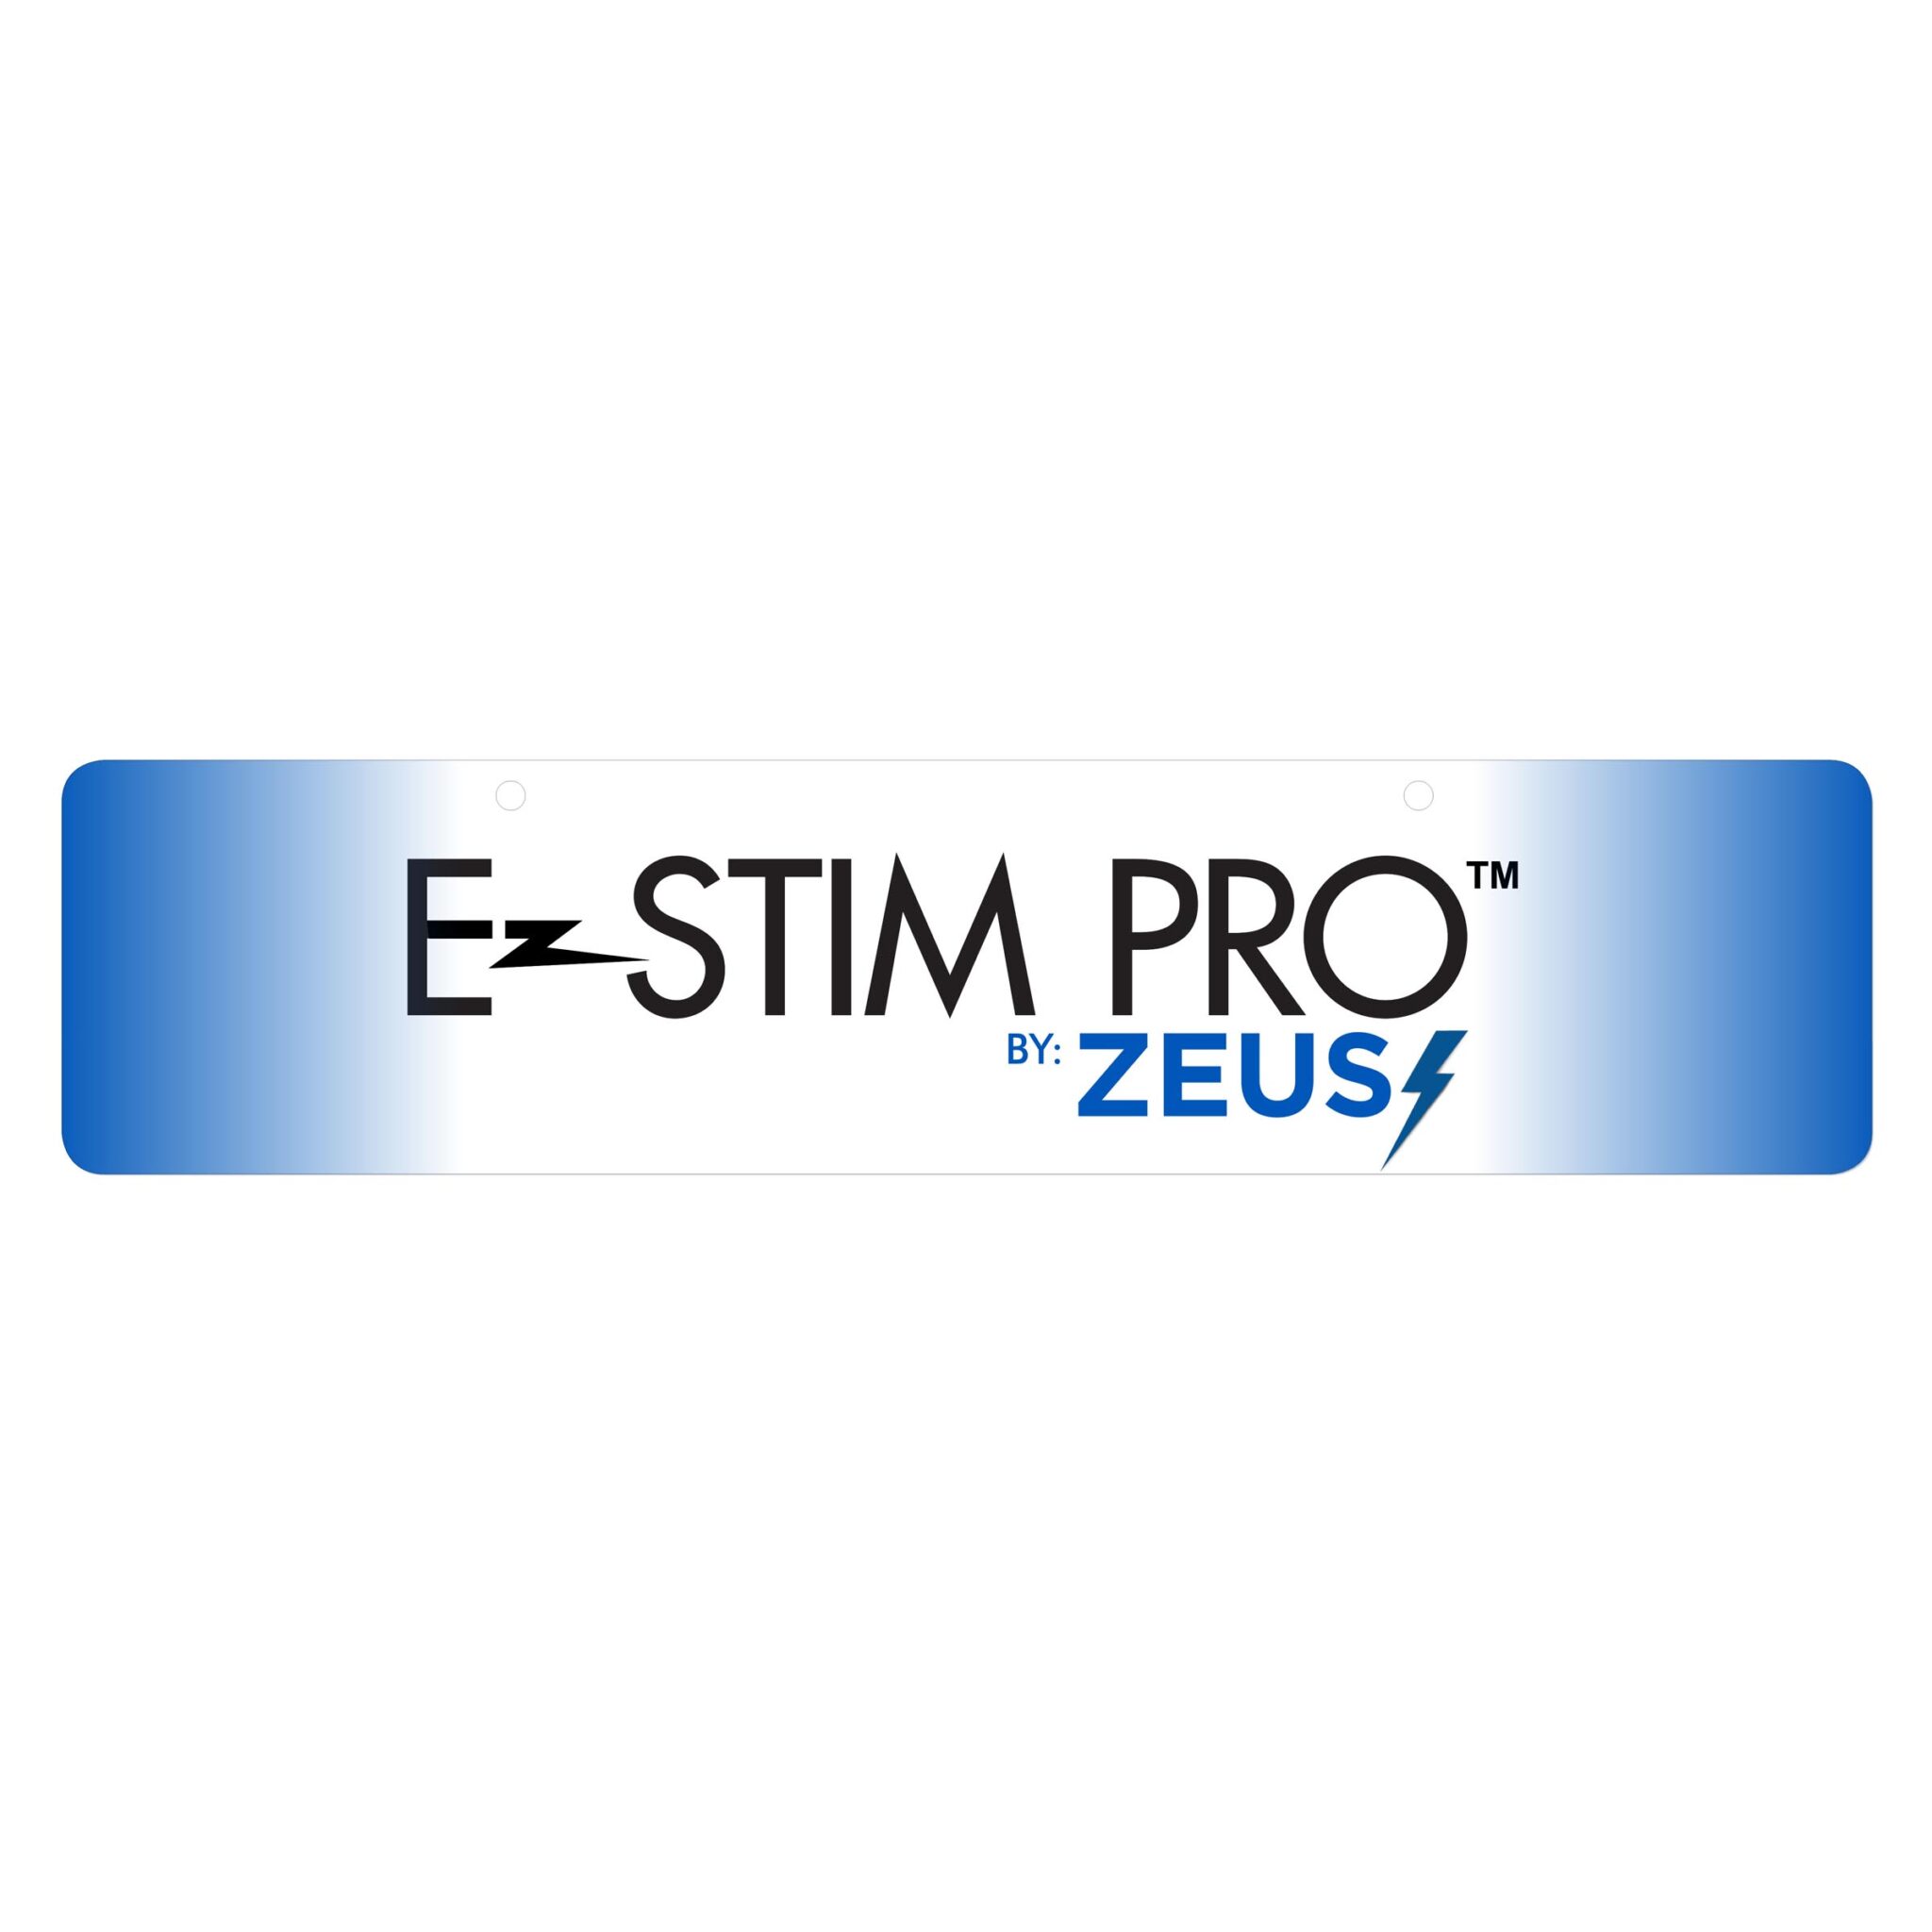 Zeus E-Stim Pro Display Sign-3